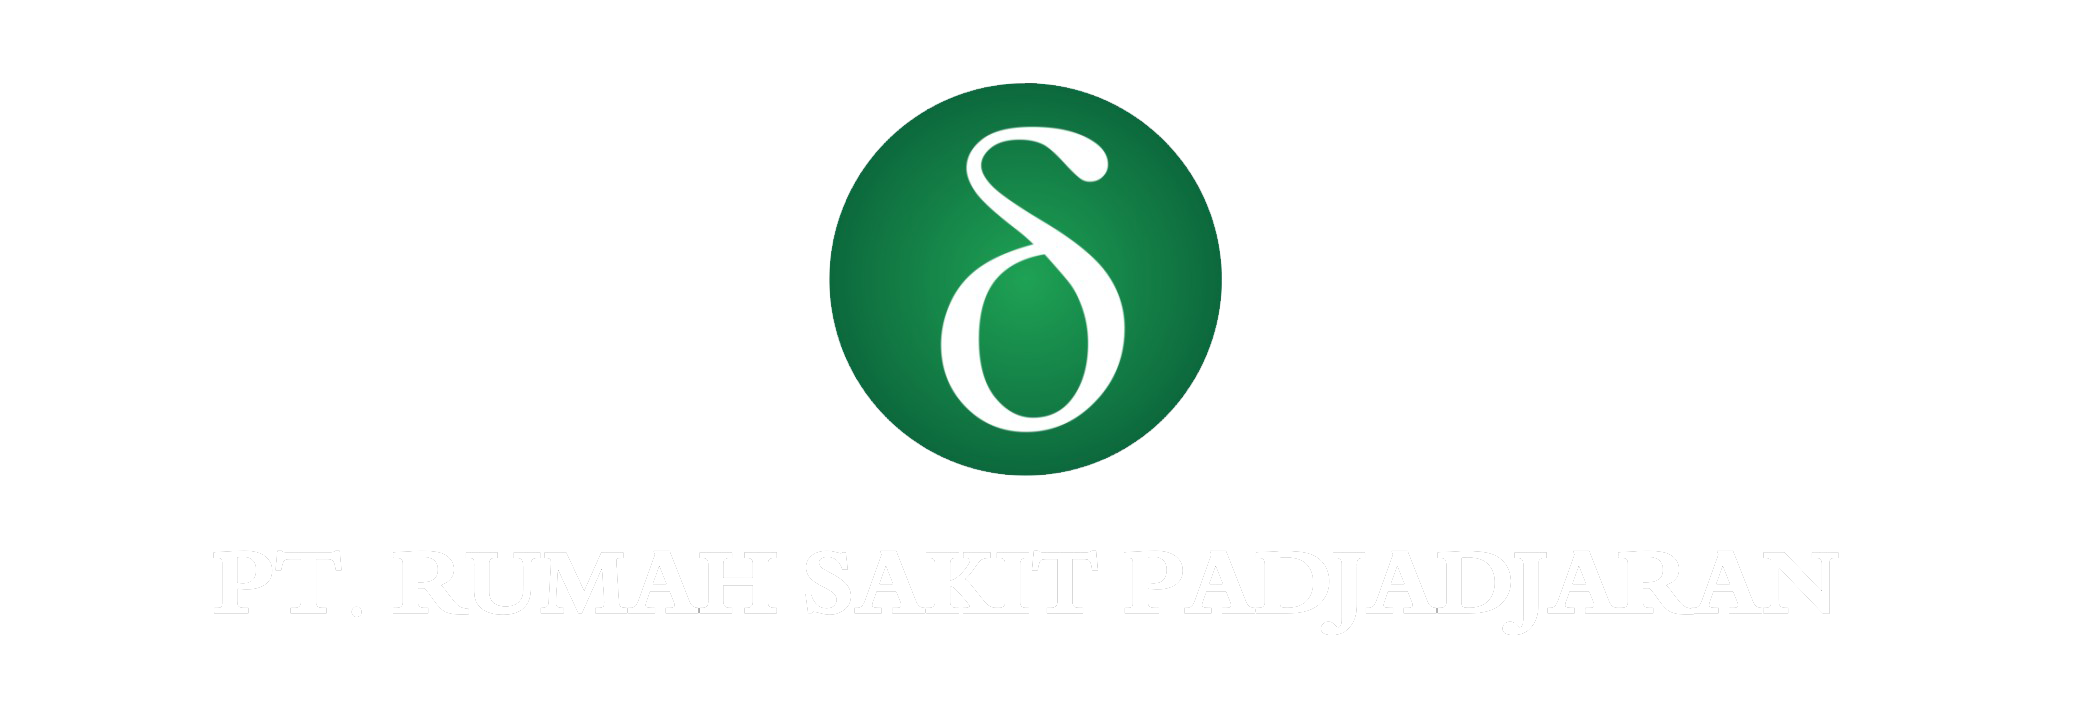 PT RS Padjadjaran